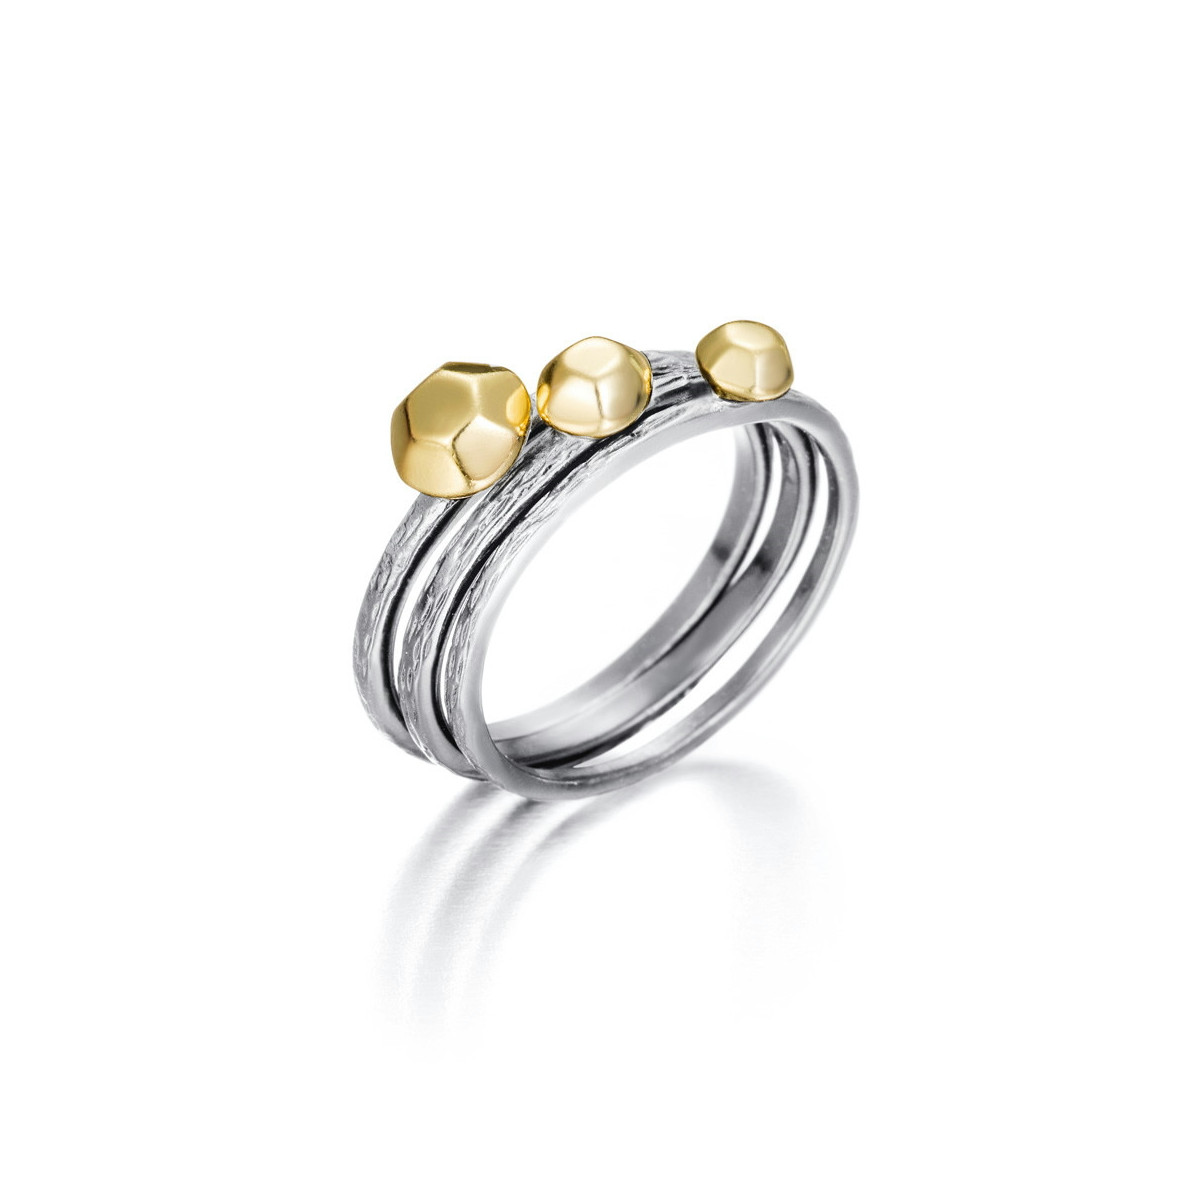 CELESTIAL Ring in Silver. 18k Gold Vermeil